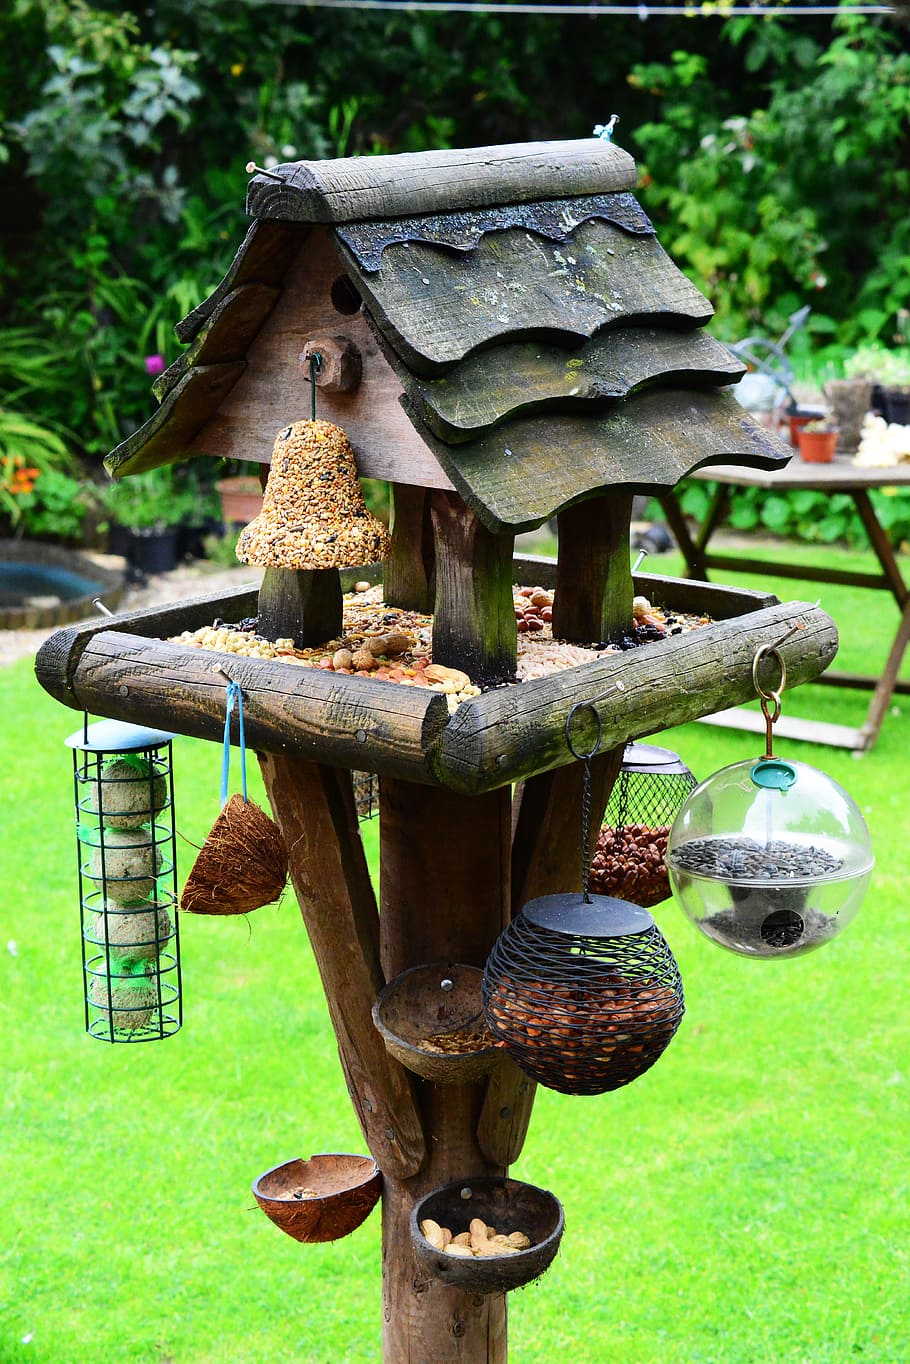 bird house, bird table, feeding station, bird food, garden, feeder, perch, day, focus on foreground, plant